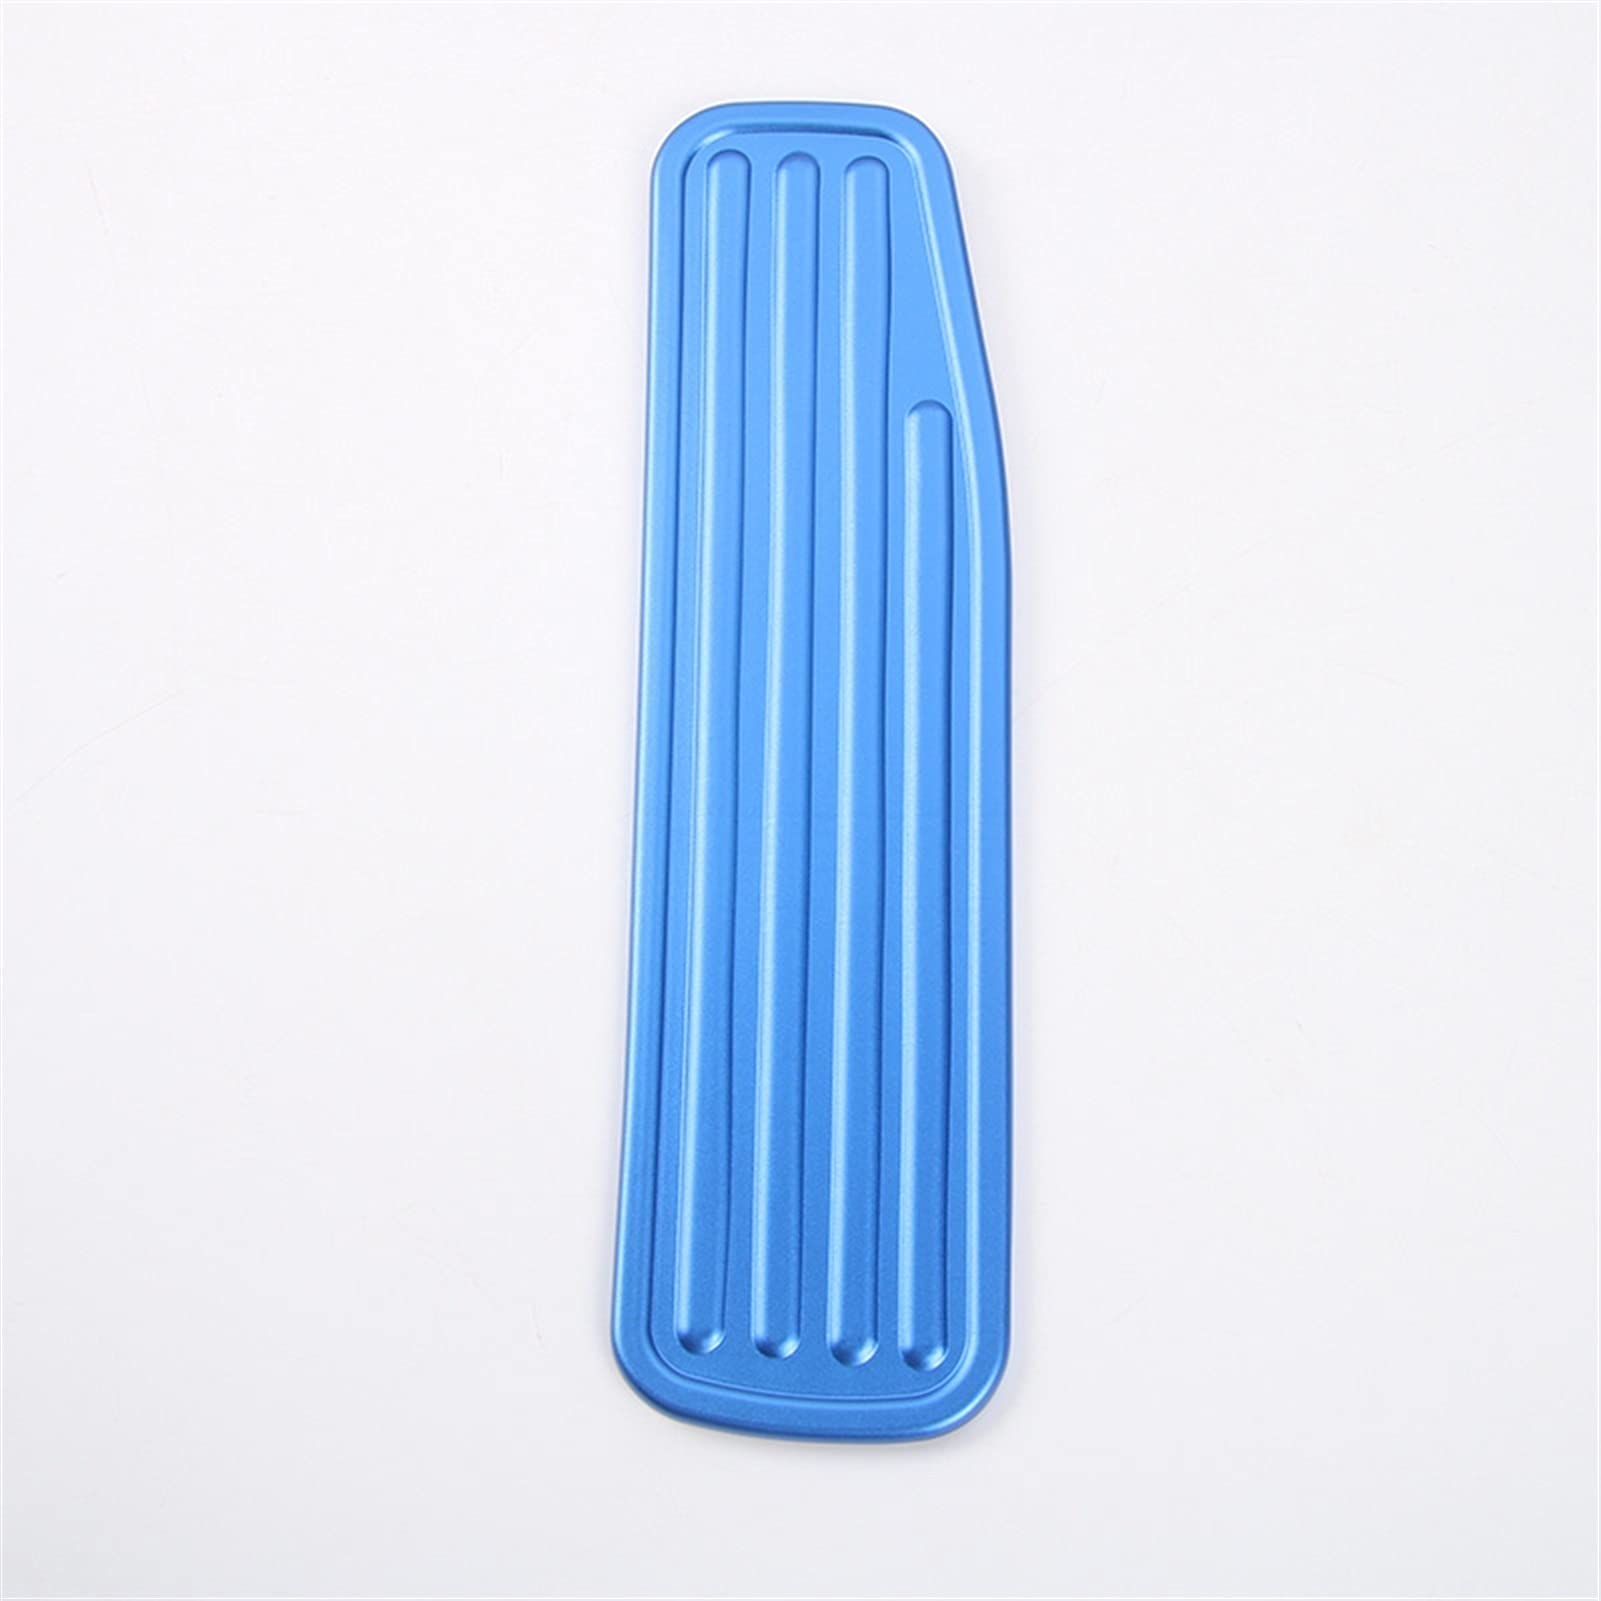 VLZUNO Aluminium Auto Innen Linke Fußstütze Platte Pedal Dekoration Abdeckung Aufkleber, for Chevrolet, for Camaro, 2017 Up Car Styling Auto-Fußpedale(Blue) von VLZUNO